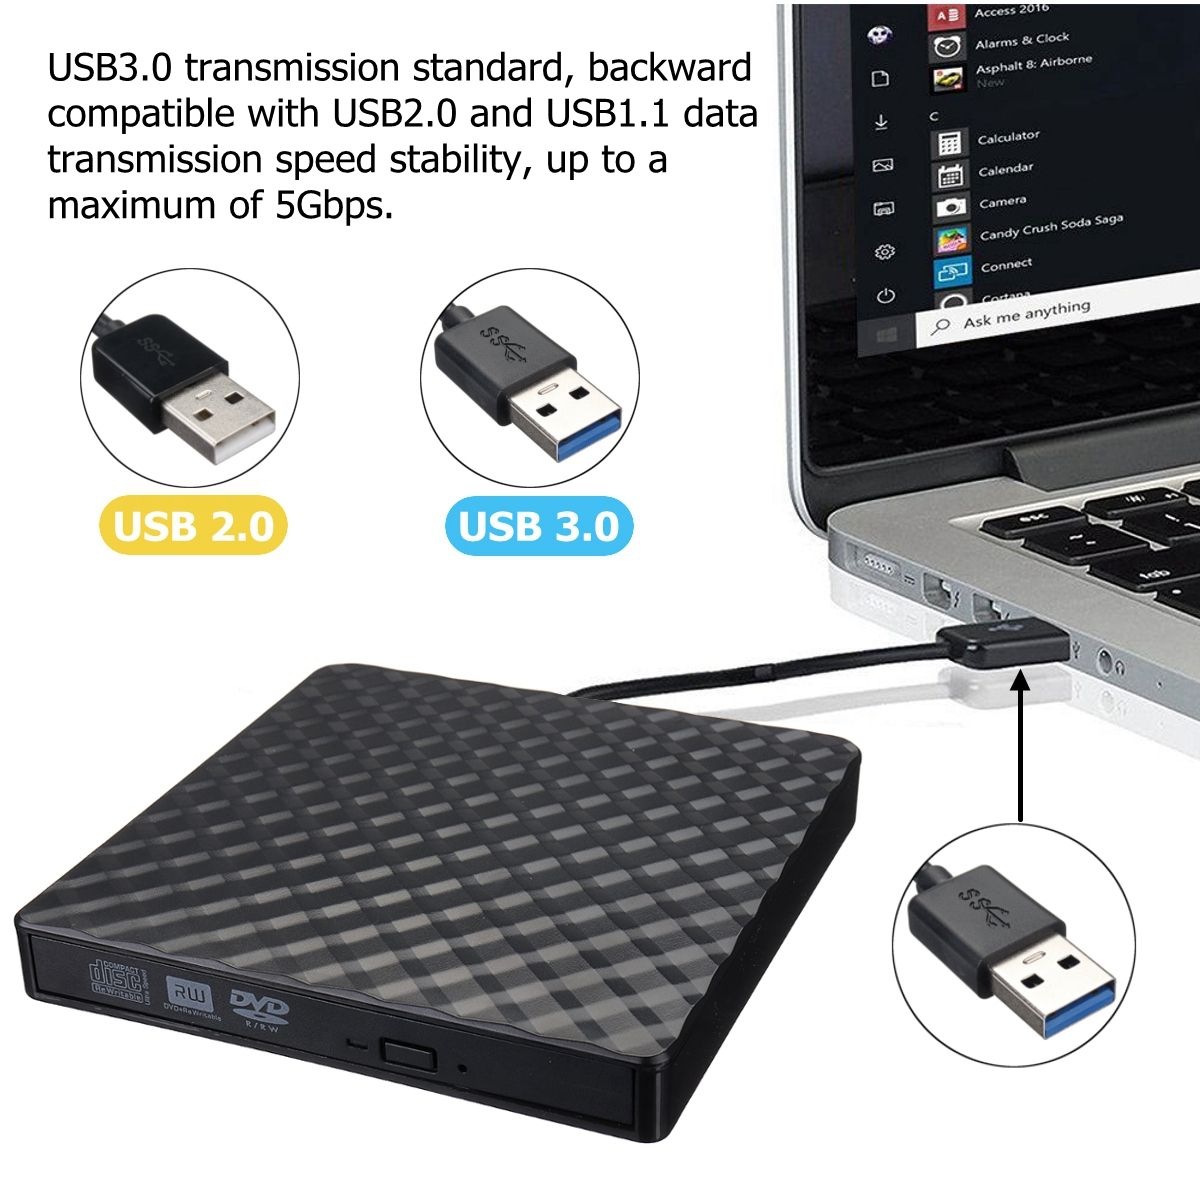 External-USB30-DVD-RW-CD-Writer-Slim-Optical-Drive-Burner-Reader-Player-For-PC-Laptop-1633940